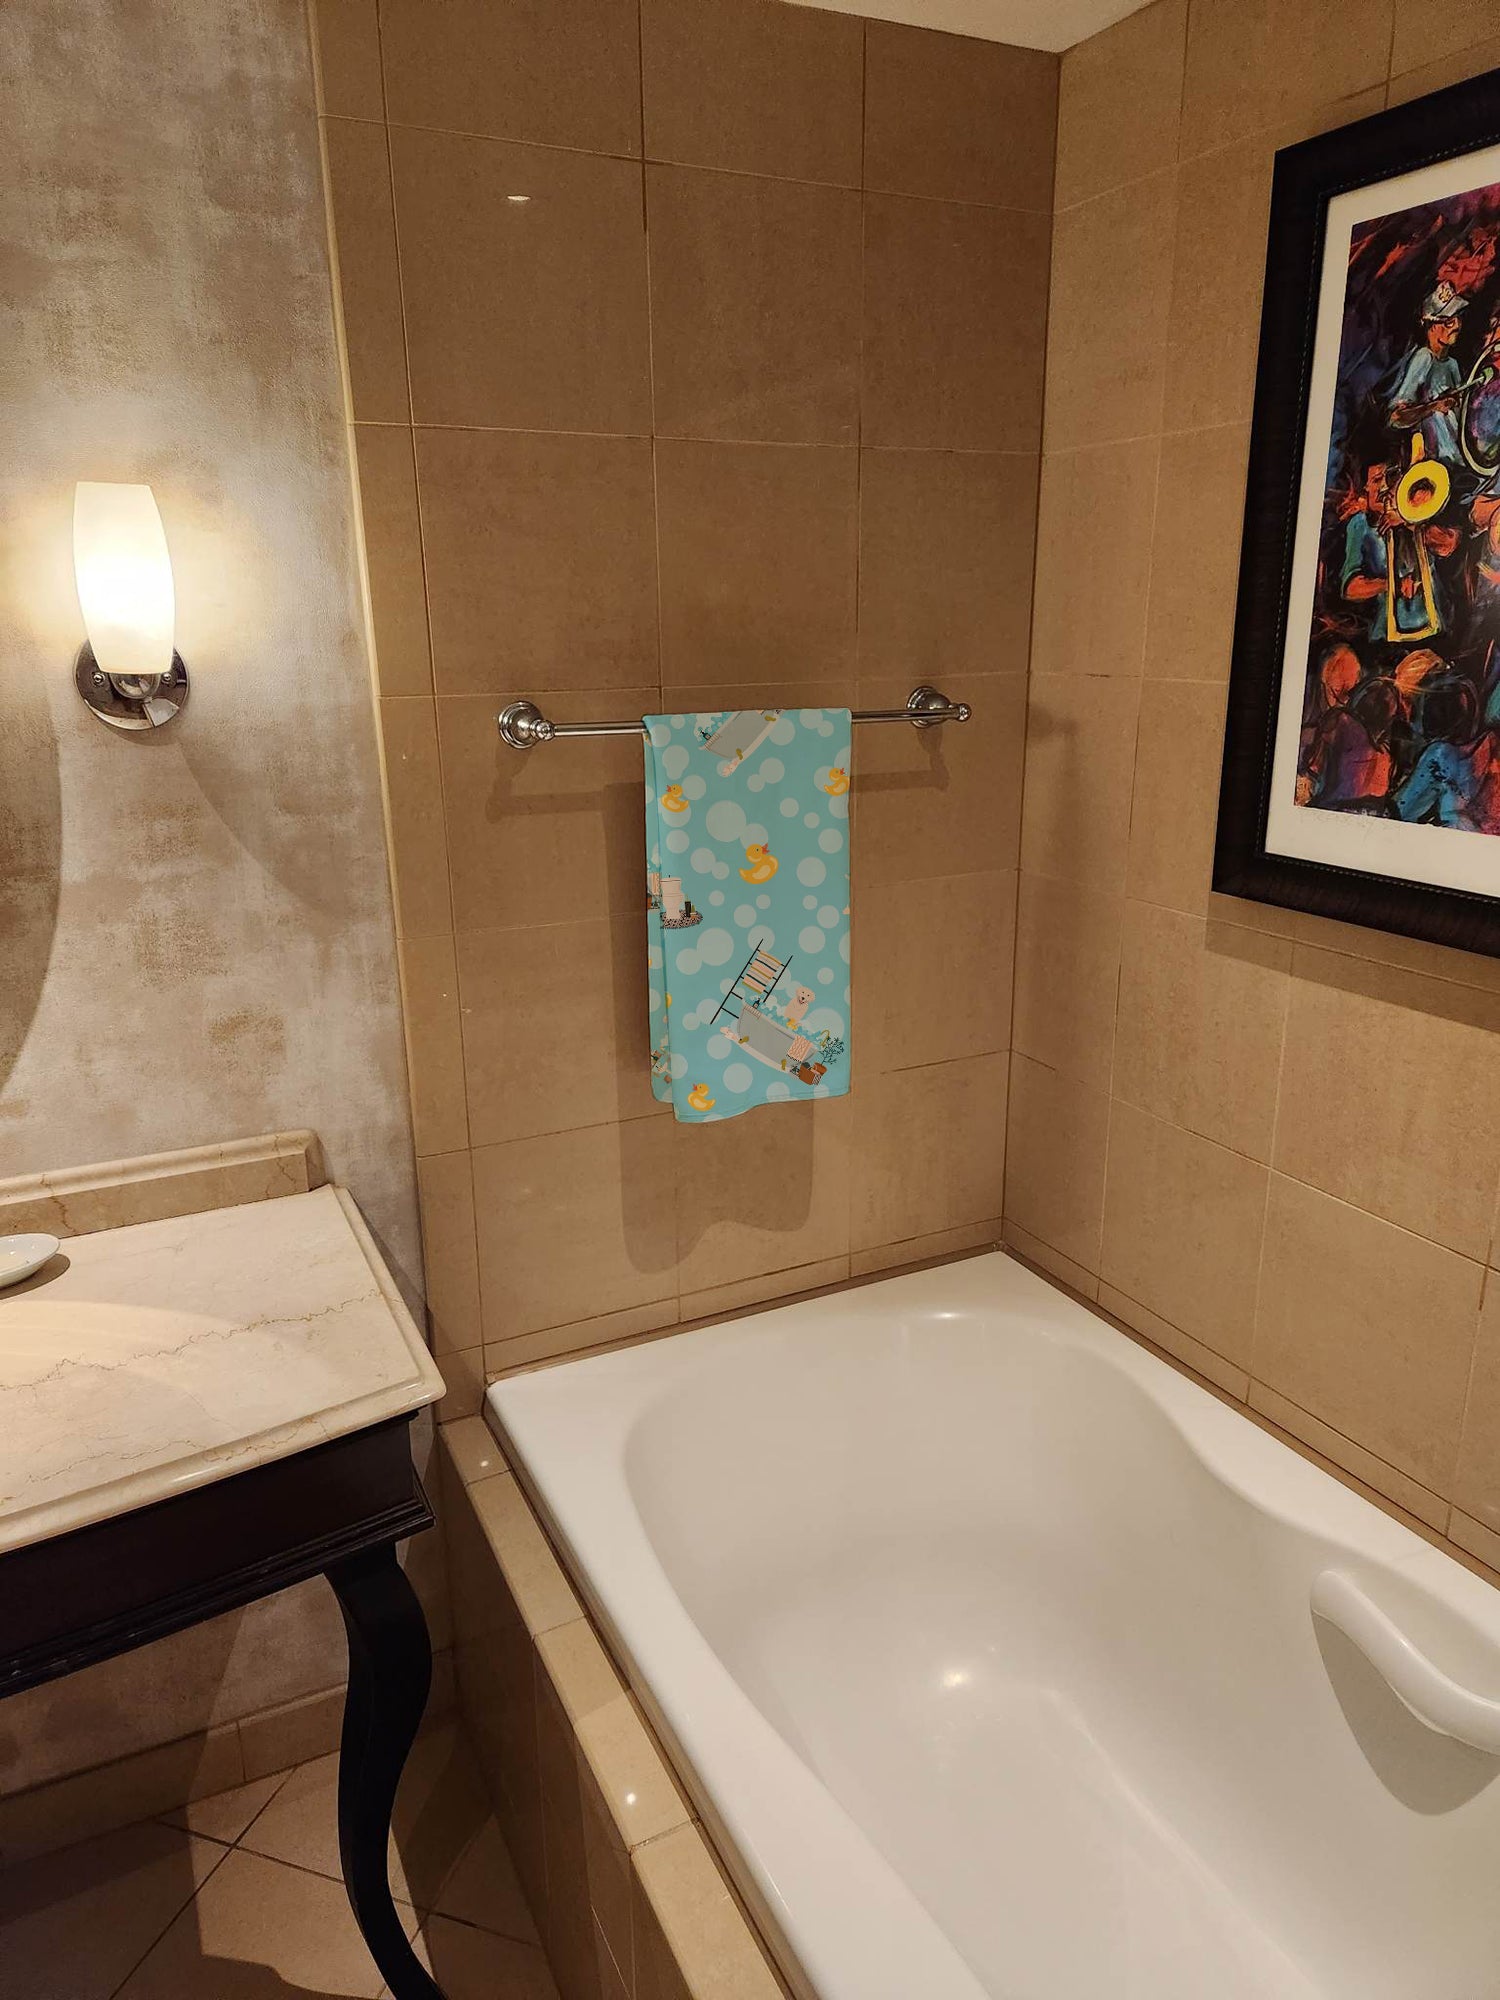 Buy this Cream Golden Retriever Bath Towel Large